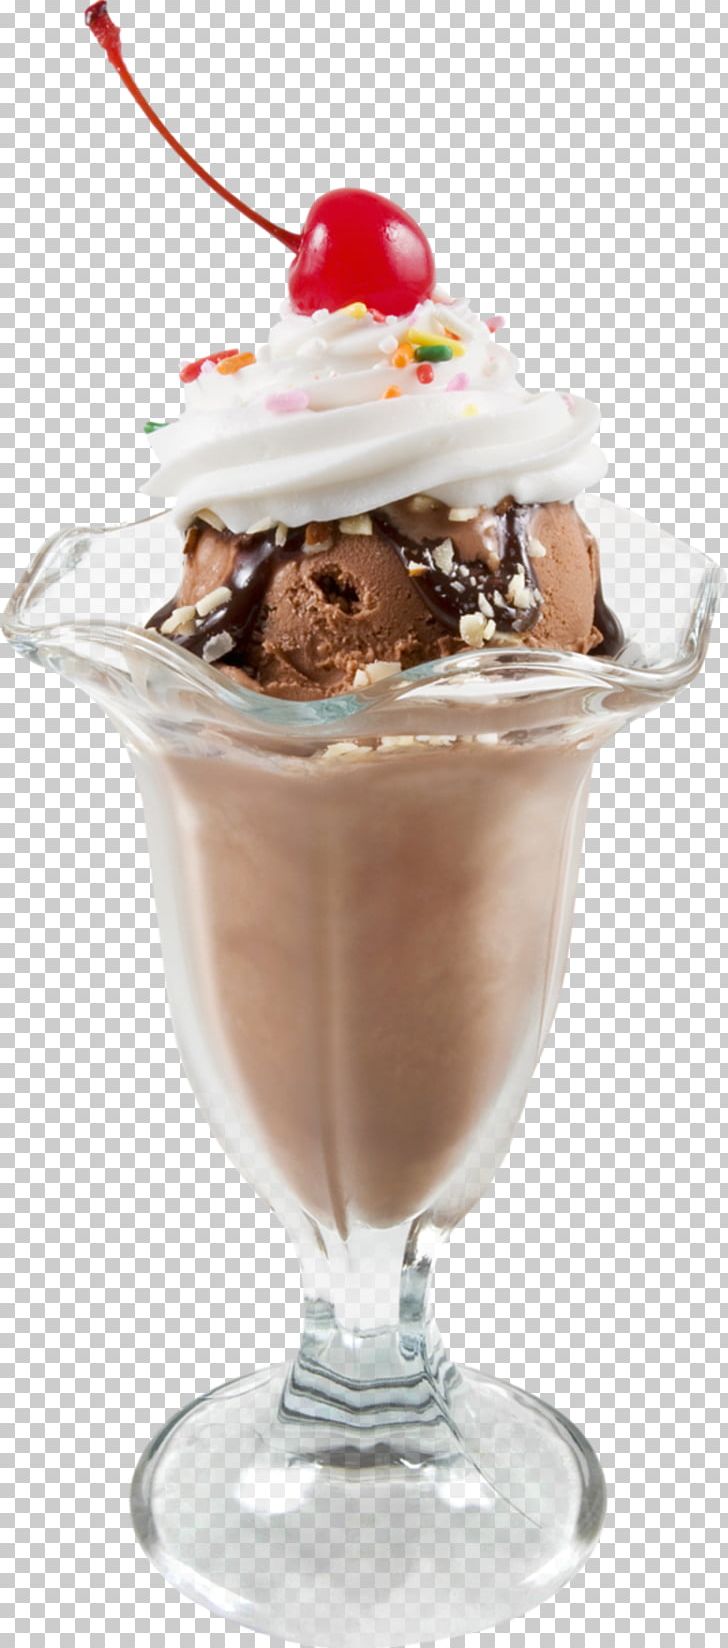 Sundae Chocolate Ice Cream Milkshake PNG, Clipart, Chantilly, Chocolate, Chocolate Ice Cream, Chocolate Pudding, Chocolate Syrup Free PNG Download